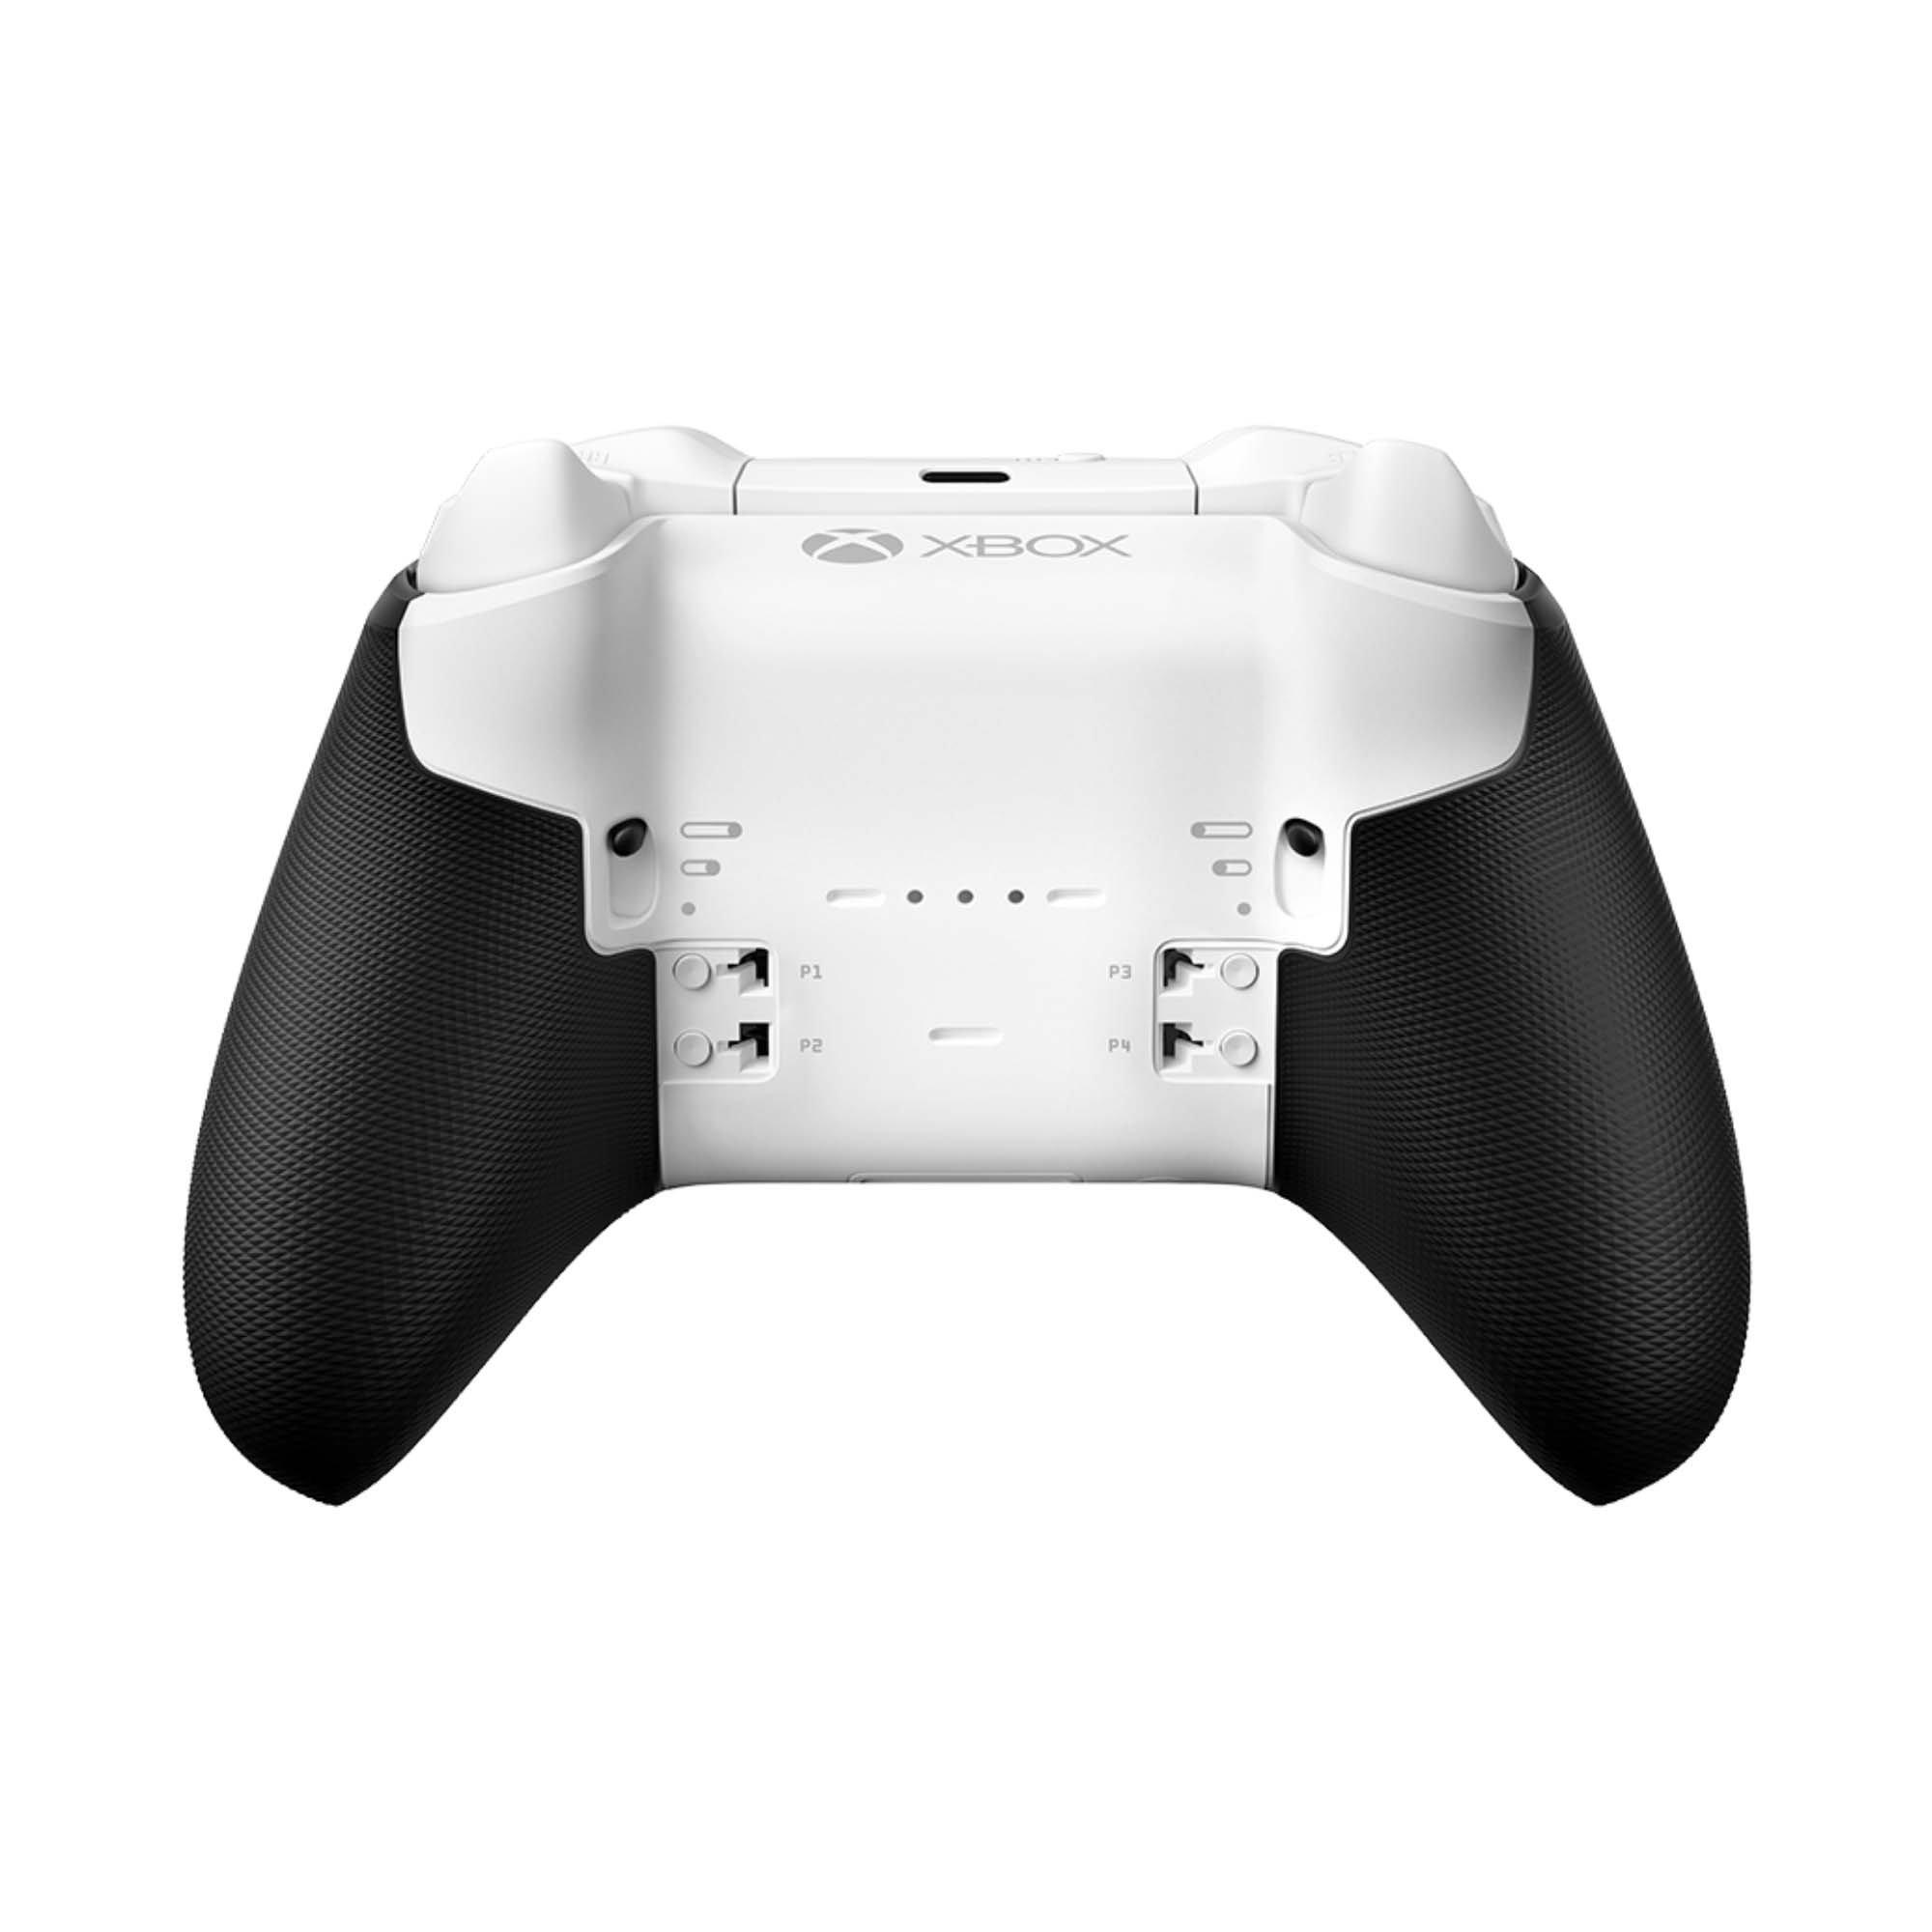 Microsoft Xbox Elite Wireless Controller Series 2 - Gamepad